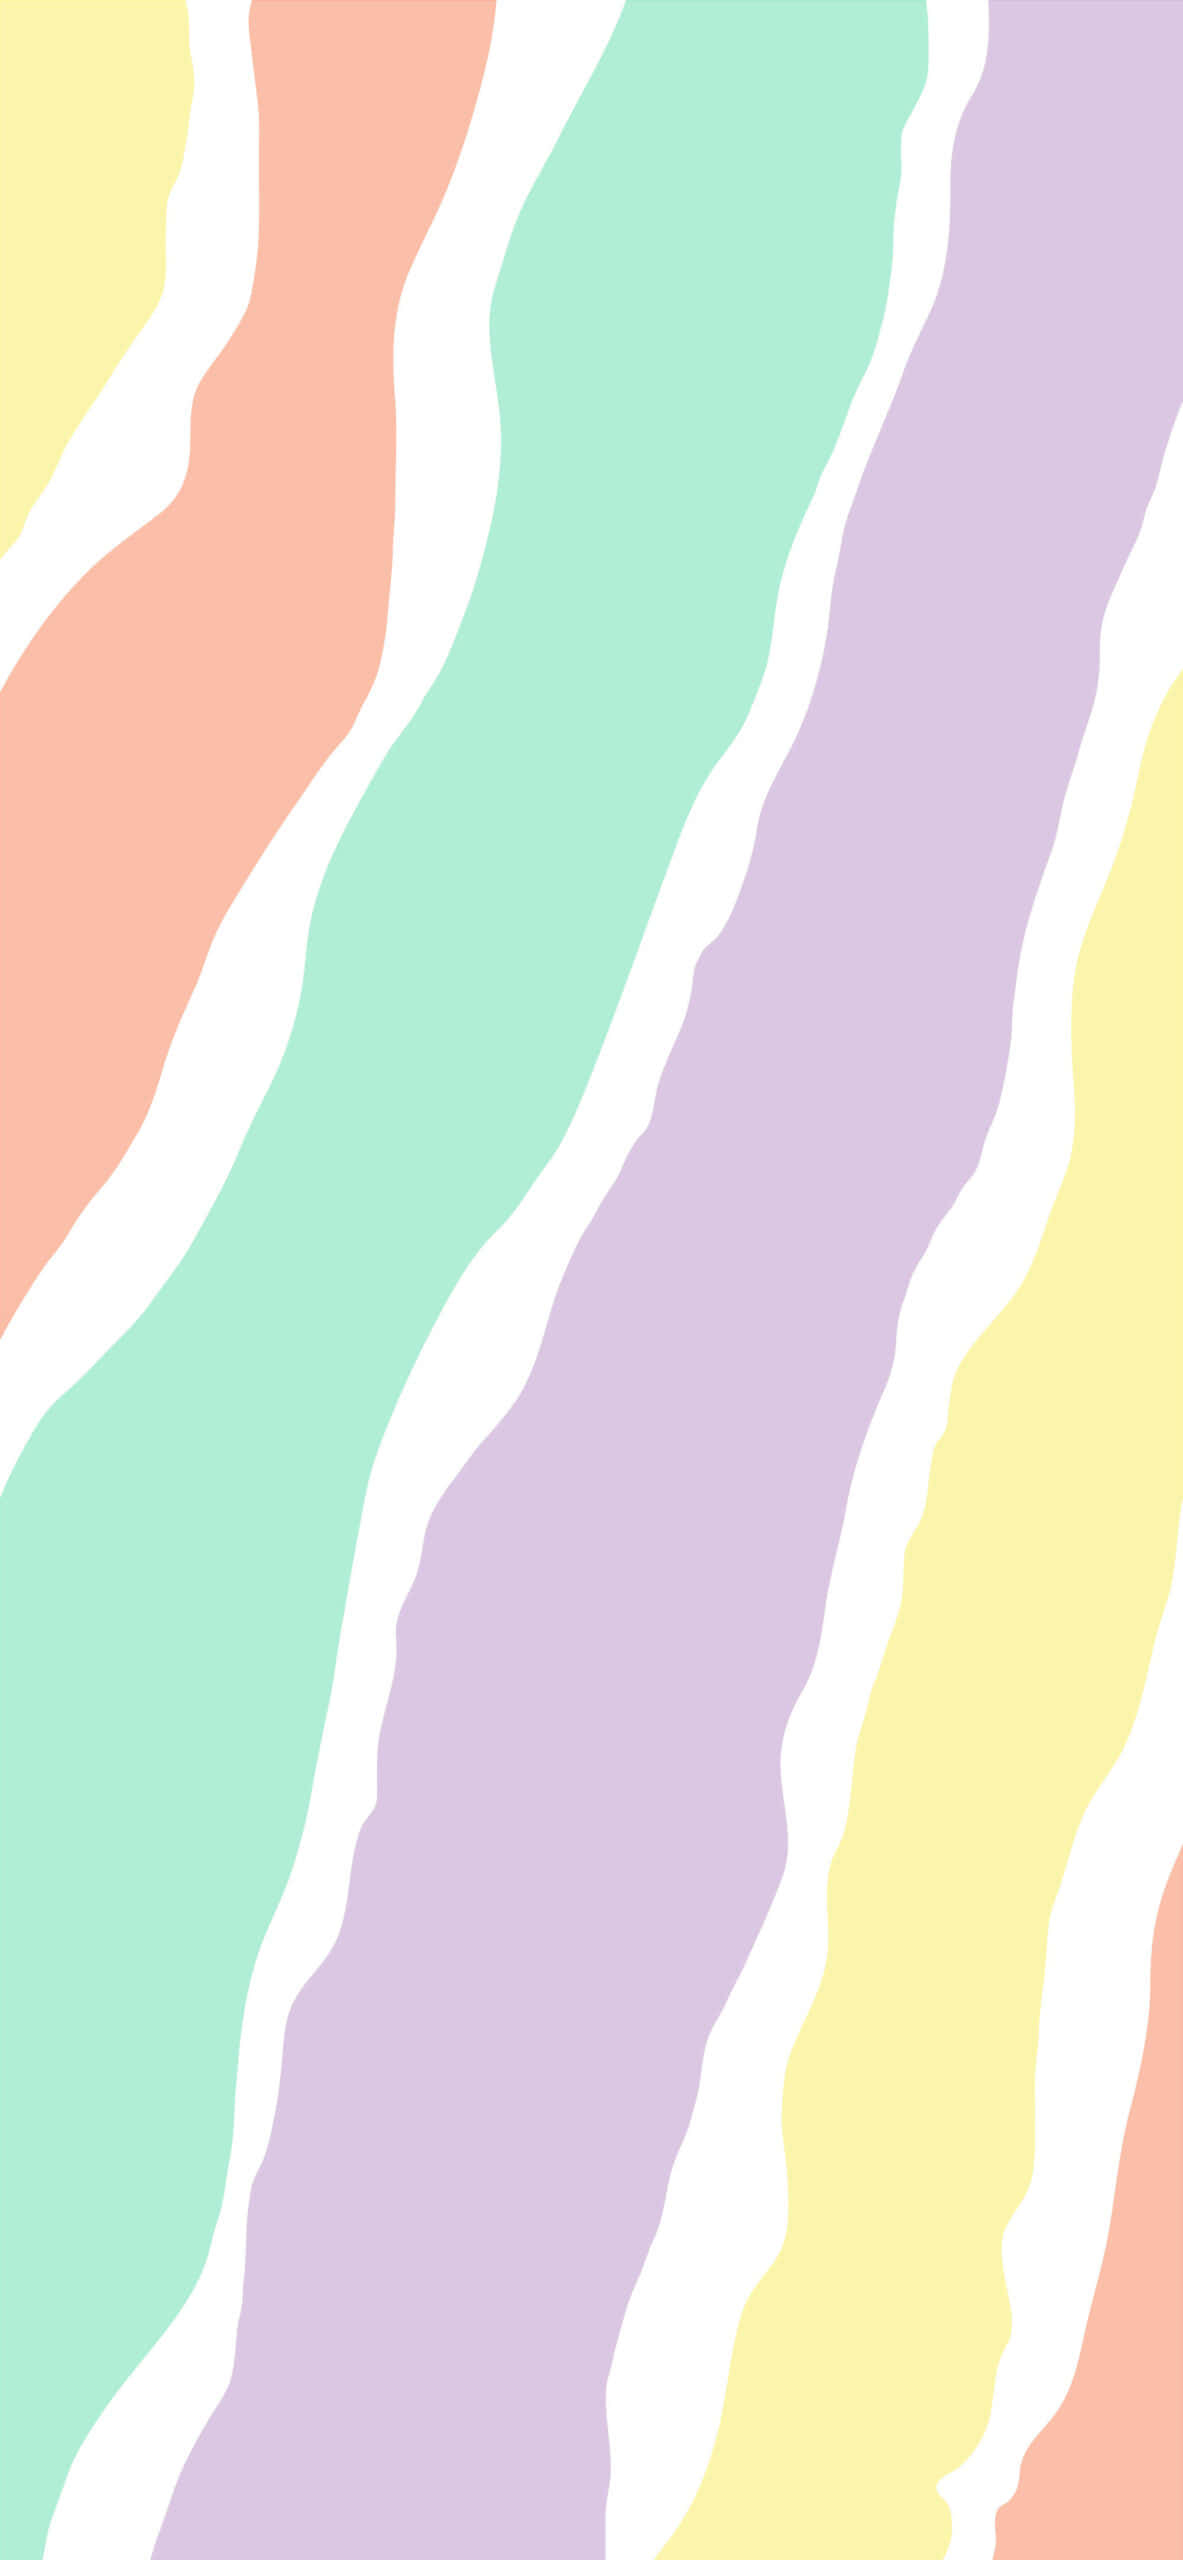 Unpapel Tapiz Rayado De Colores Pasteles Con Un Patrón De Arcoíris